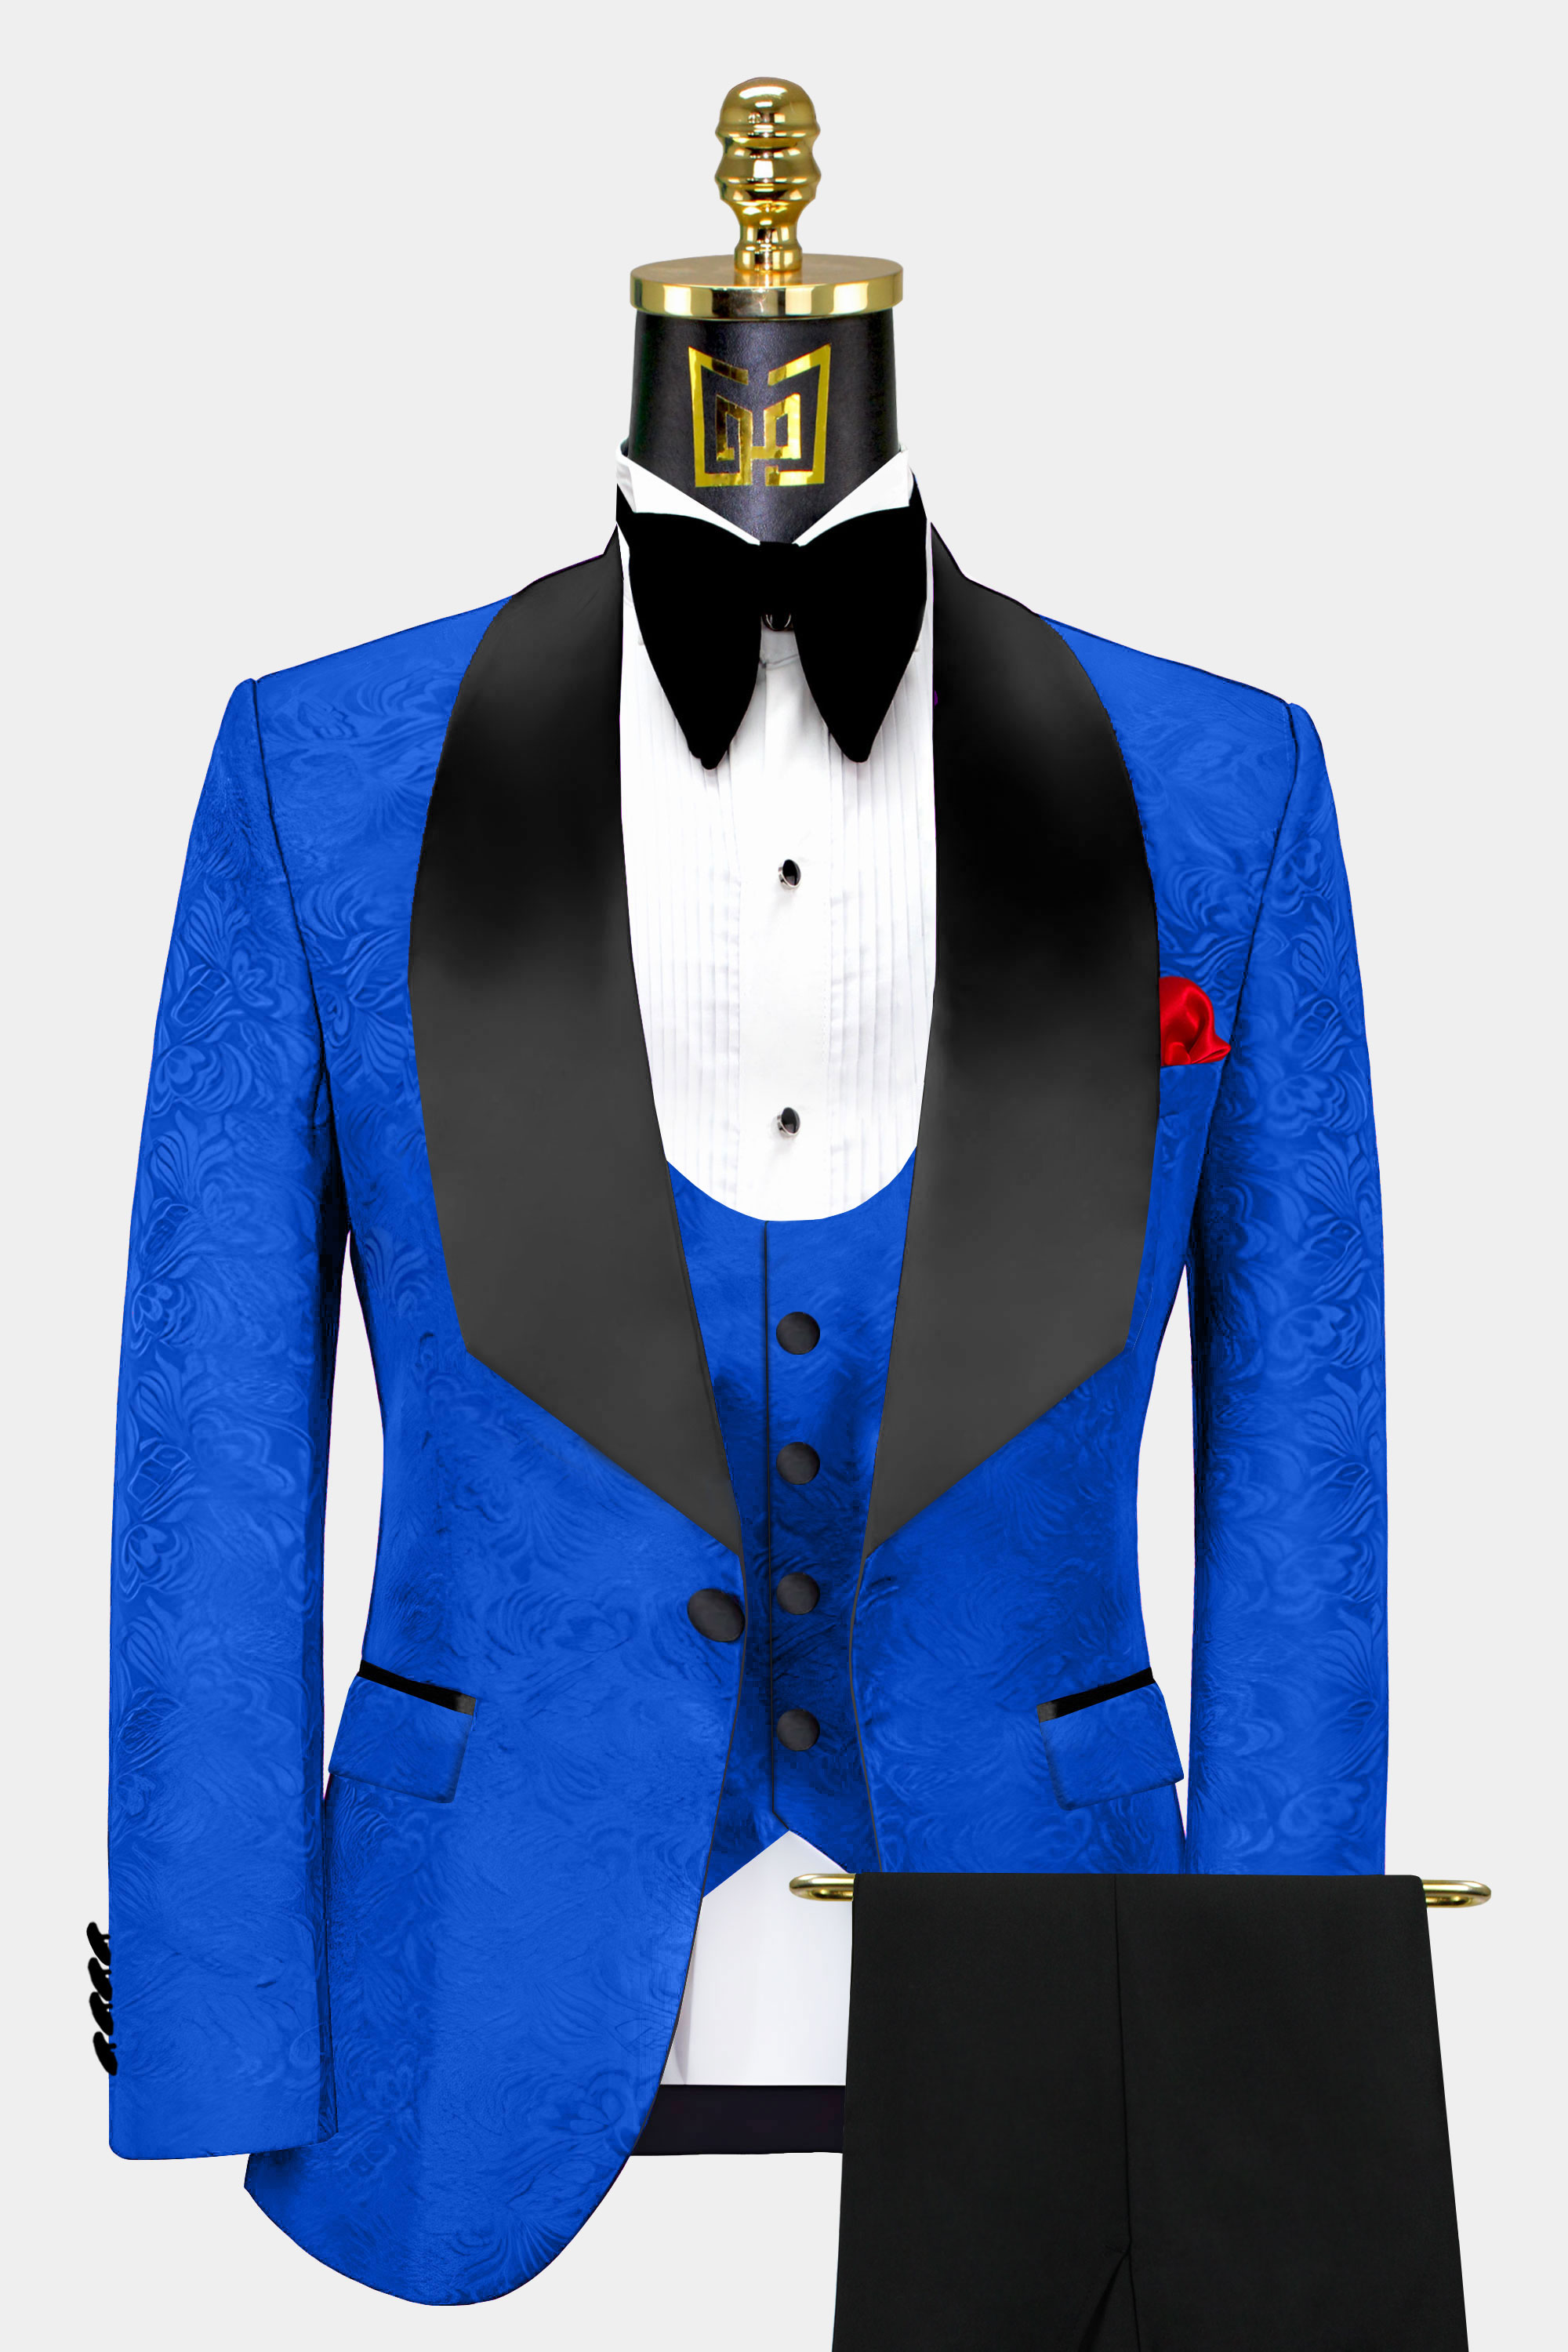 Mens-Royal-Blue-and-Black-Tuxedo-Wedding-Groom-Prom-Suit-Outfit-from-Gentlemansguru.com